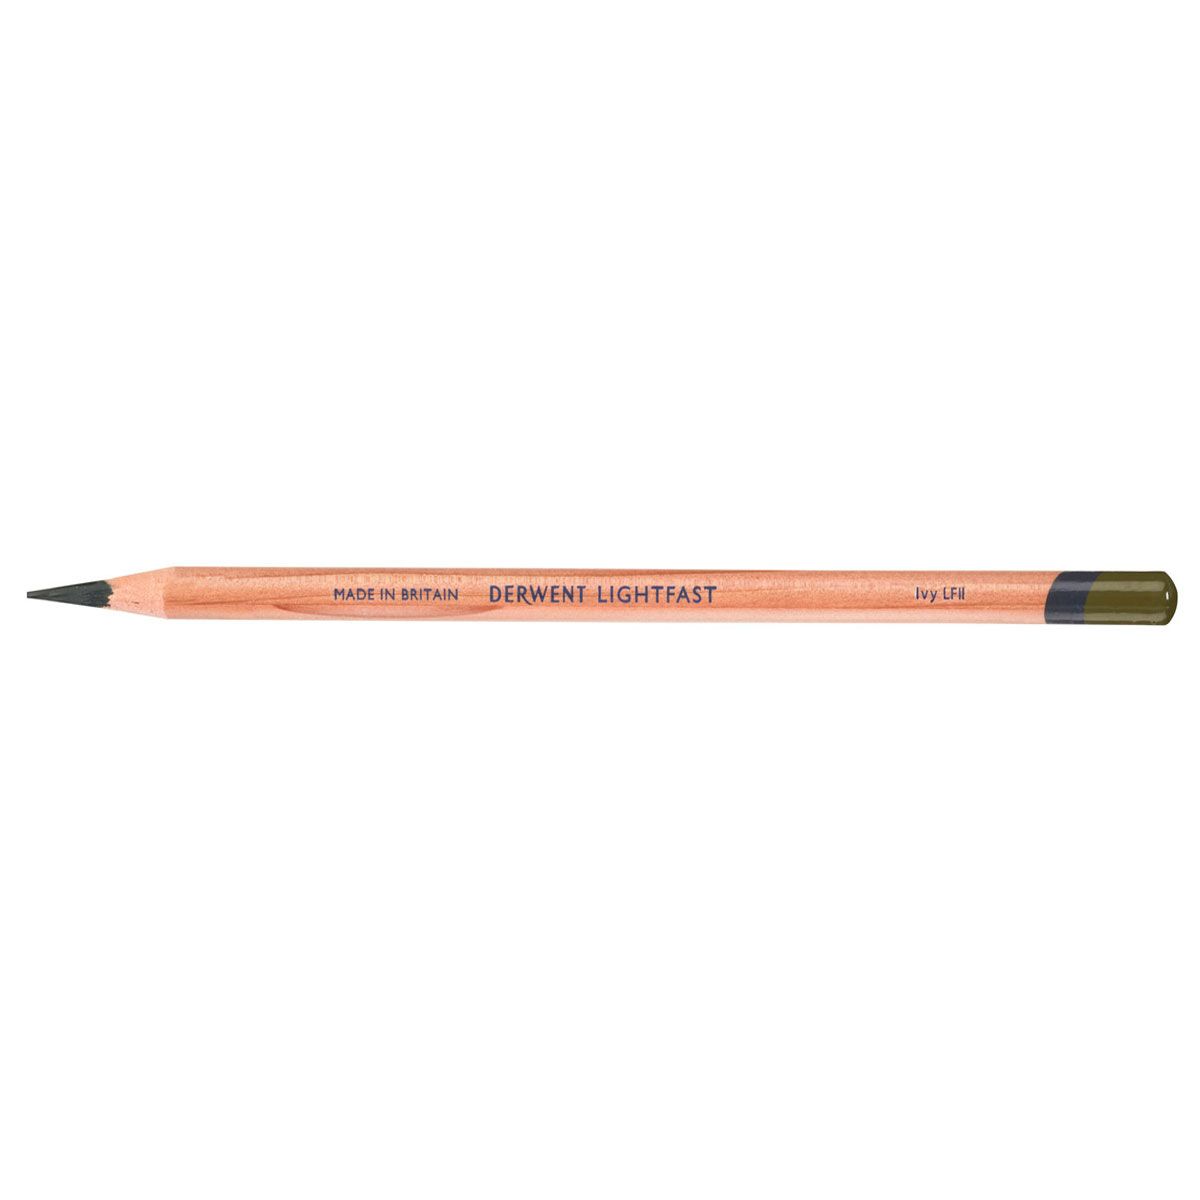 NEW Derwent Lightfast Pencil Colour: Ivy